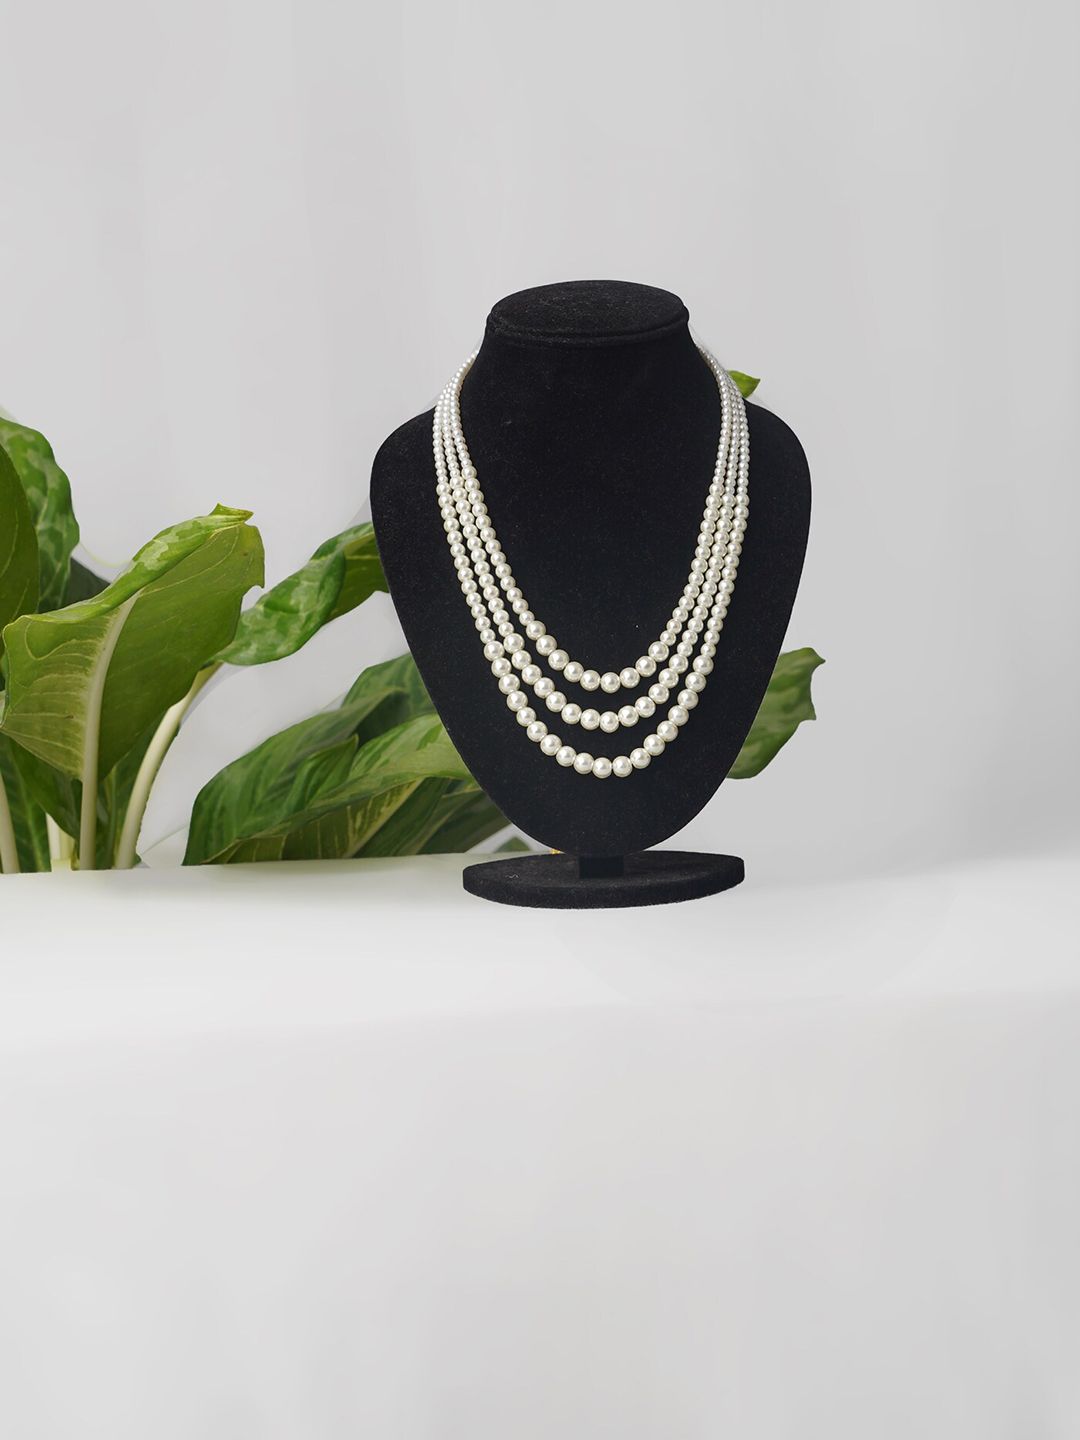 Unnati Silks White Beads Necklace Price in India